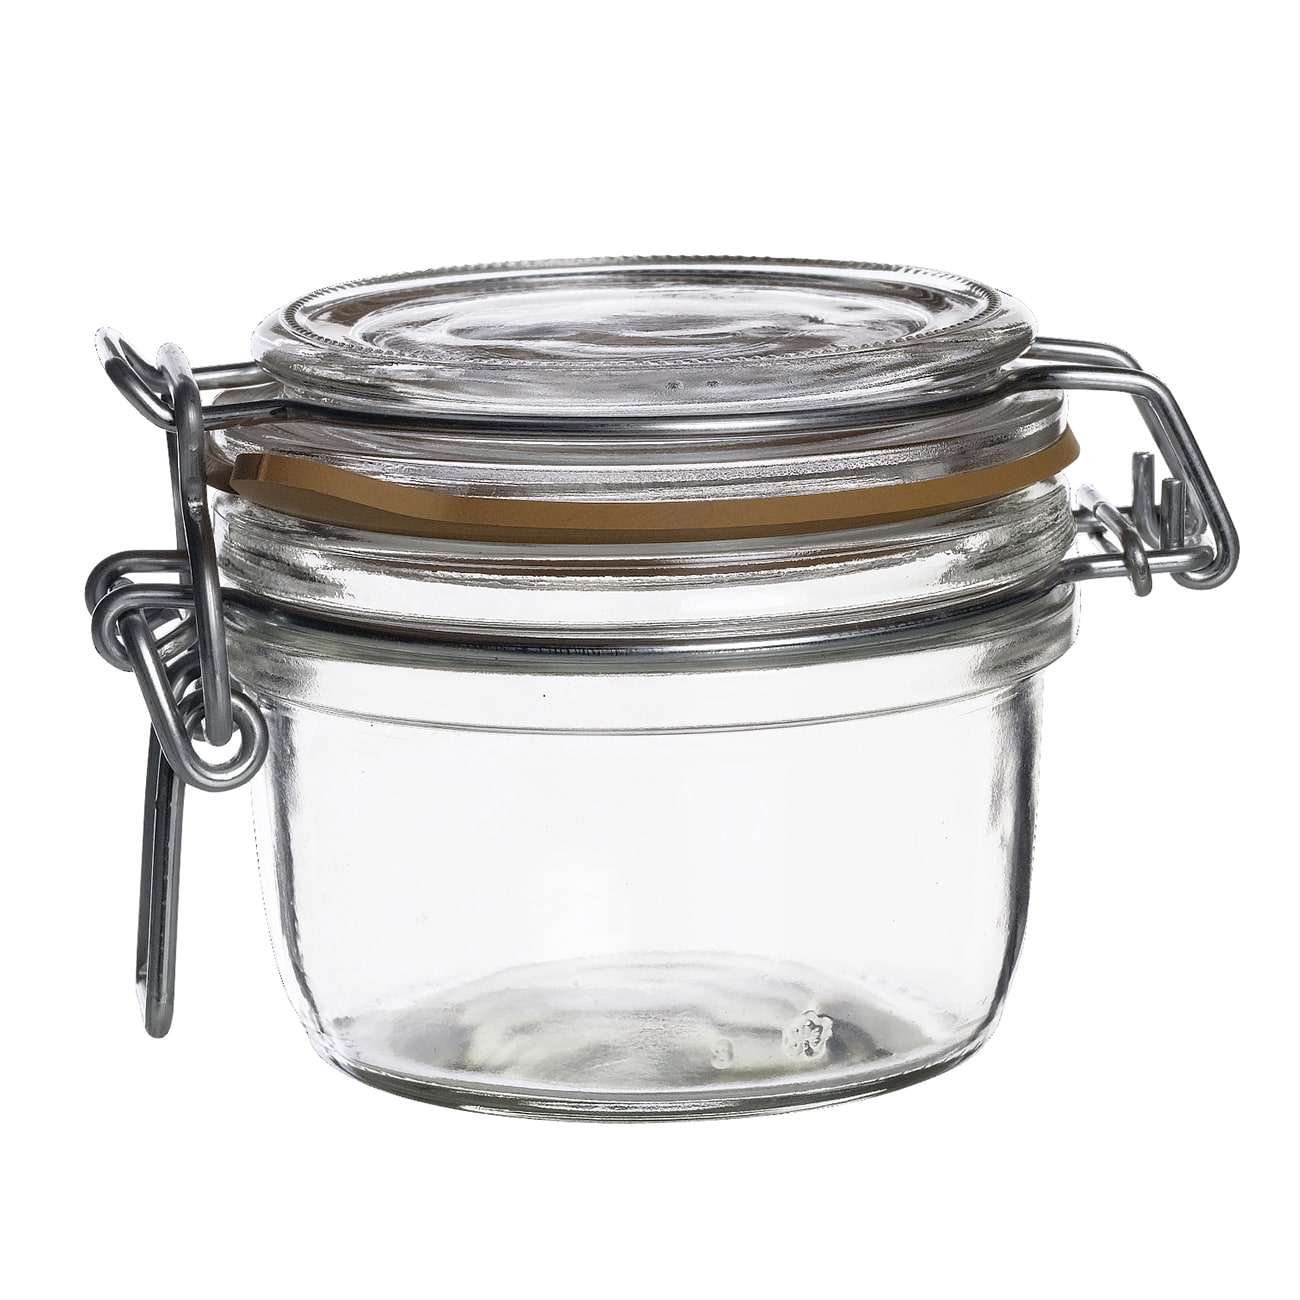 Steelite 19 oz Clear Glass Fido Jar With Clamp Lid